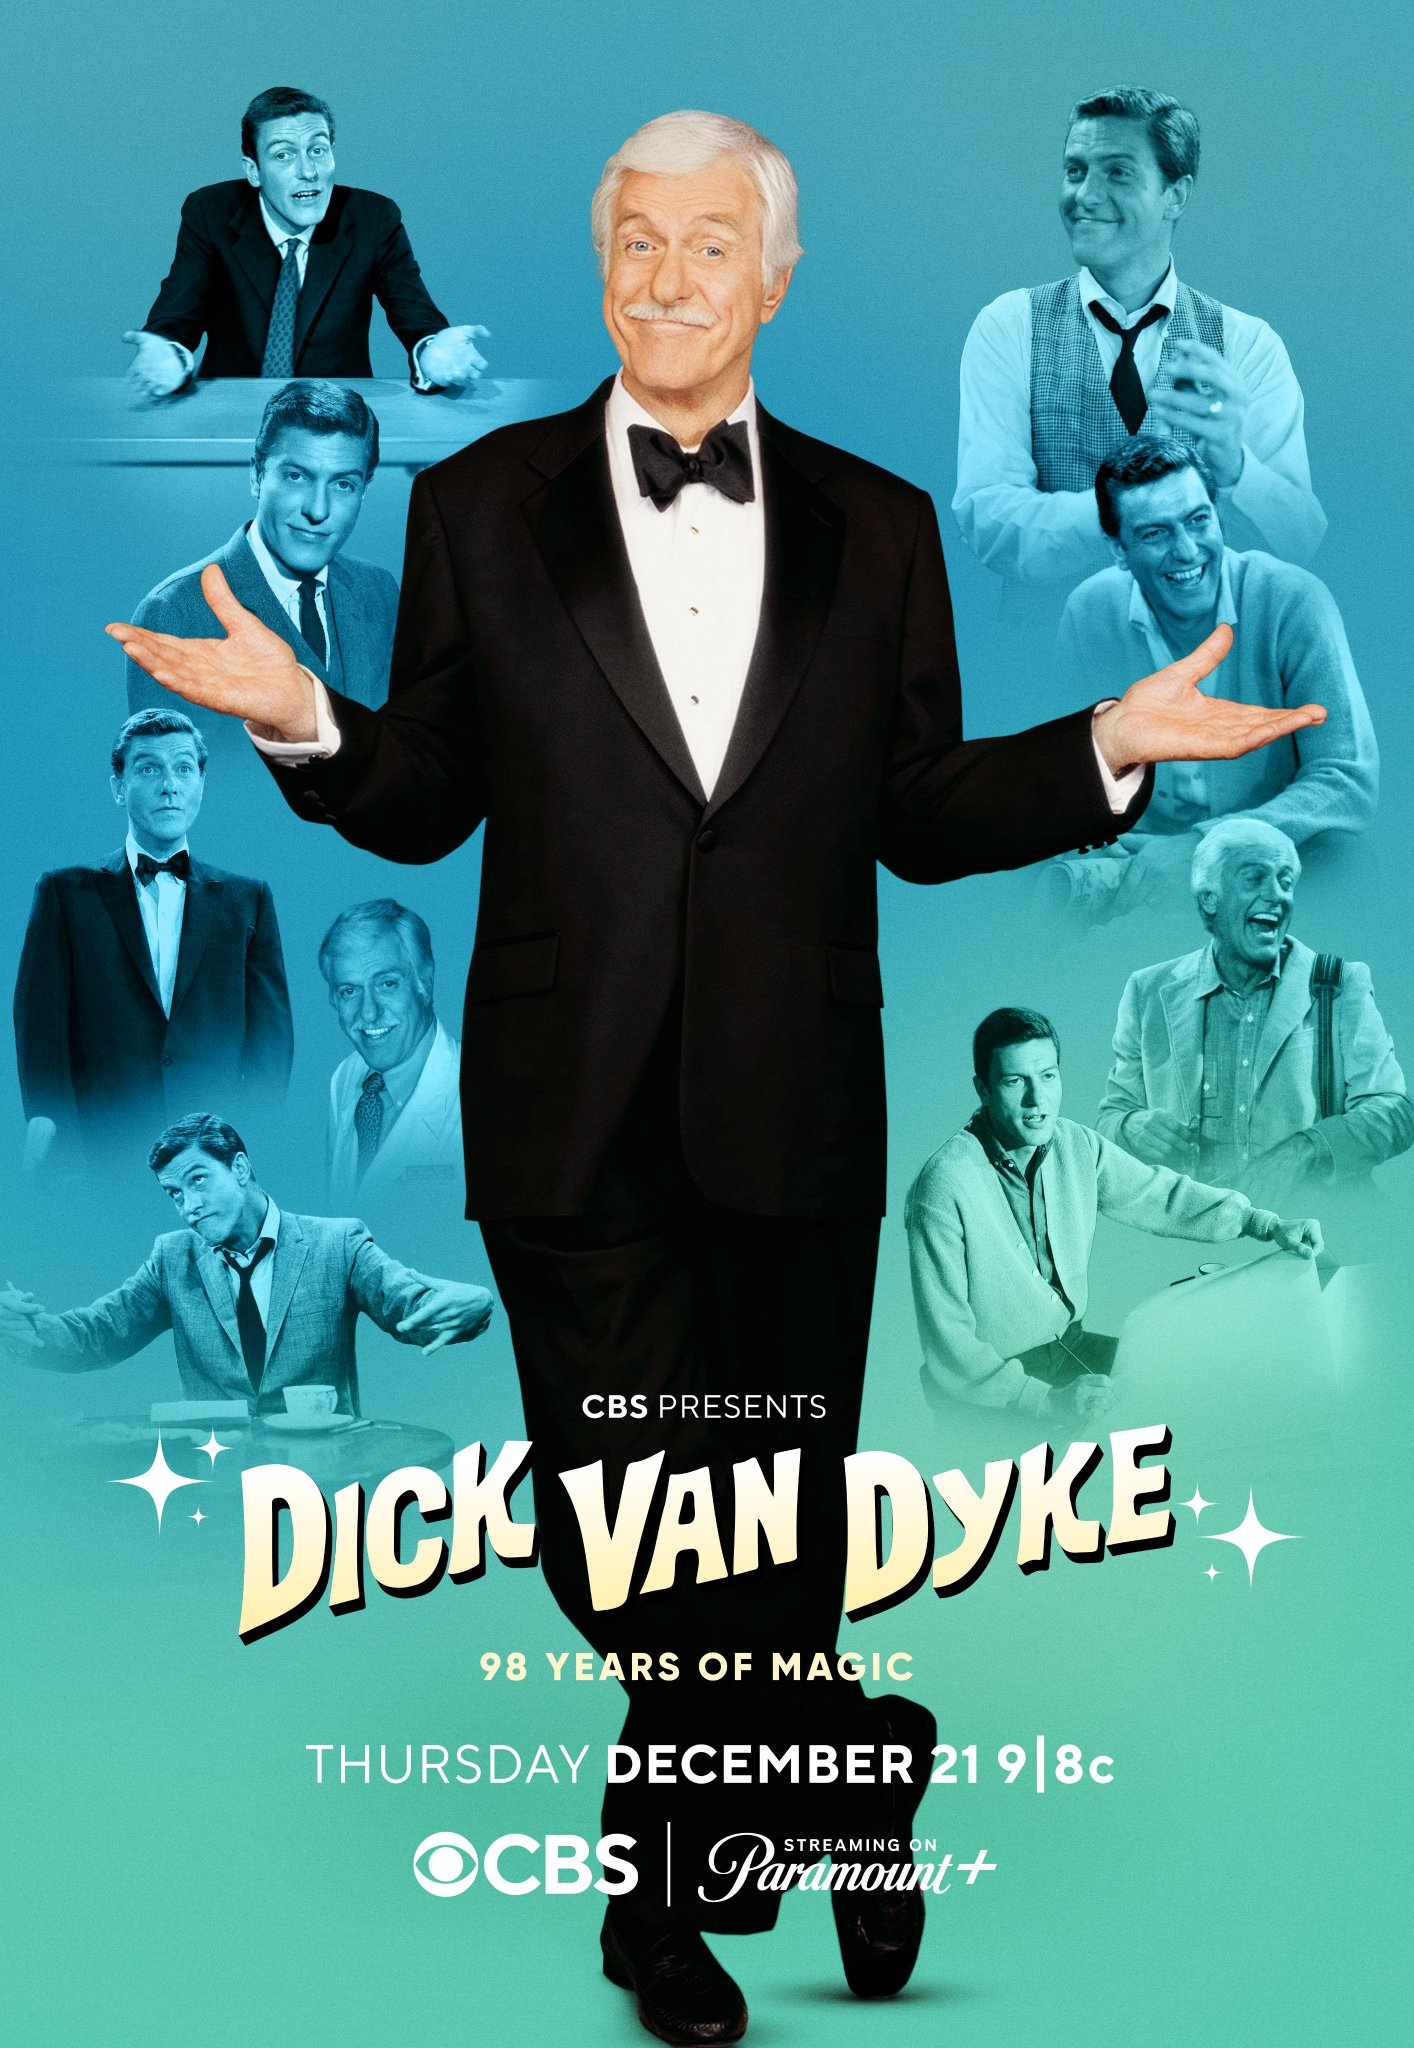 Dick Van Dyke CBS Special on X: "Dick Van Dyke 98 Years Of Magic Airing  Thursday, December 21st on @cbs at 9/8c #dickvandyke98 @iammrvandy  https://t.co/z1V00WyV01" / X